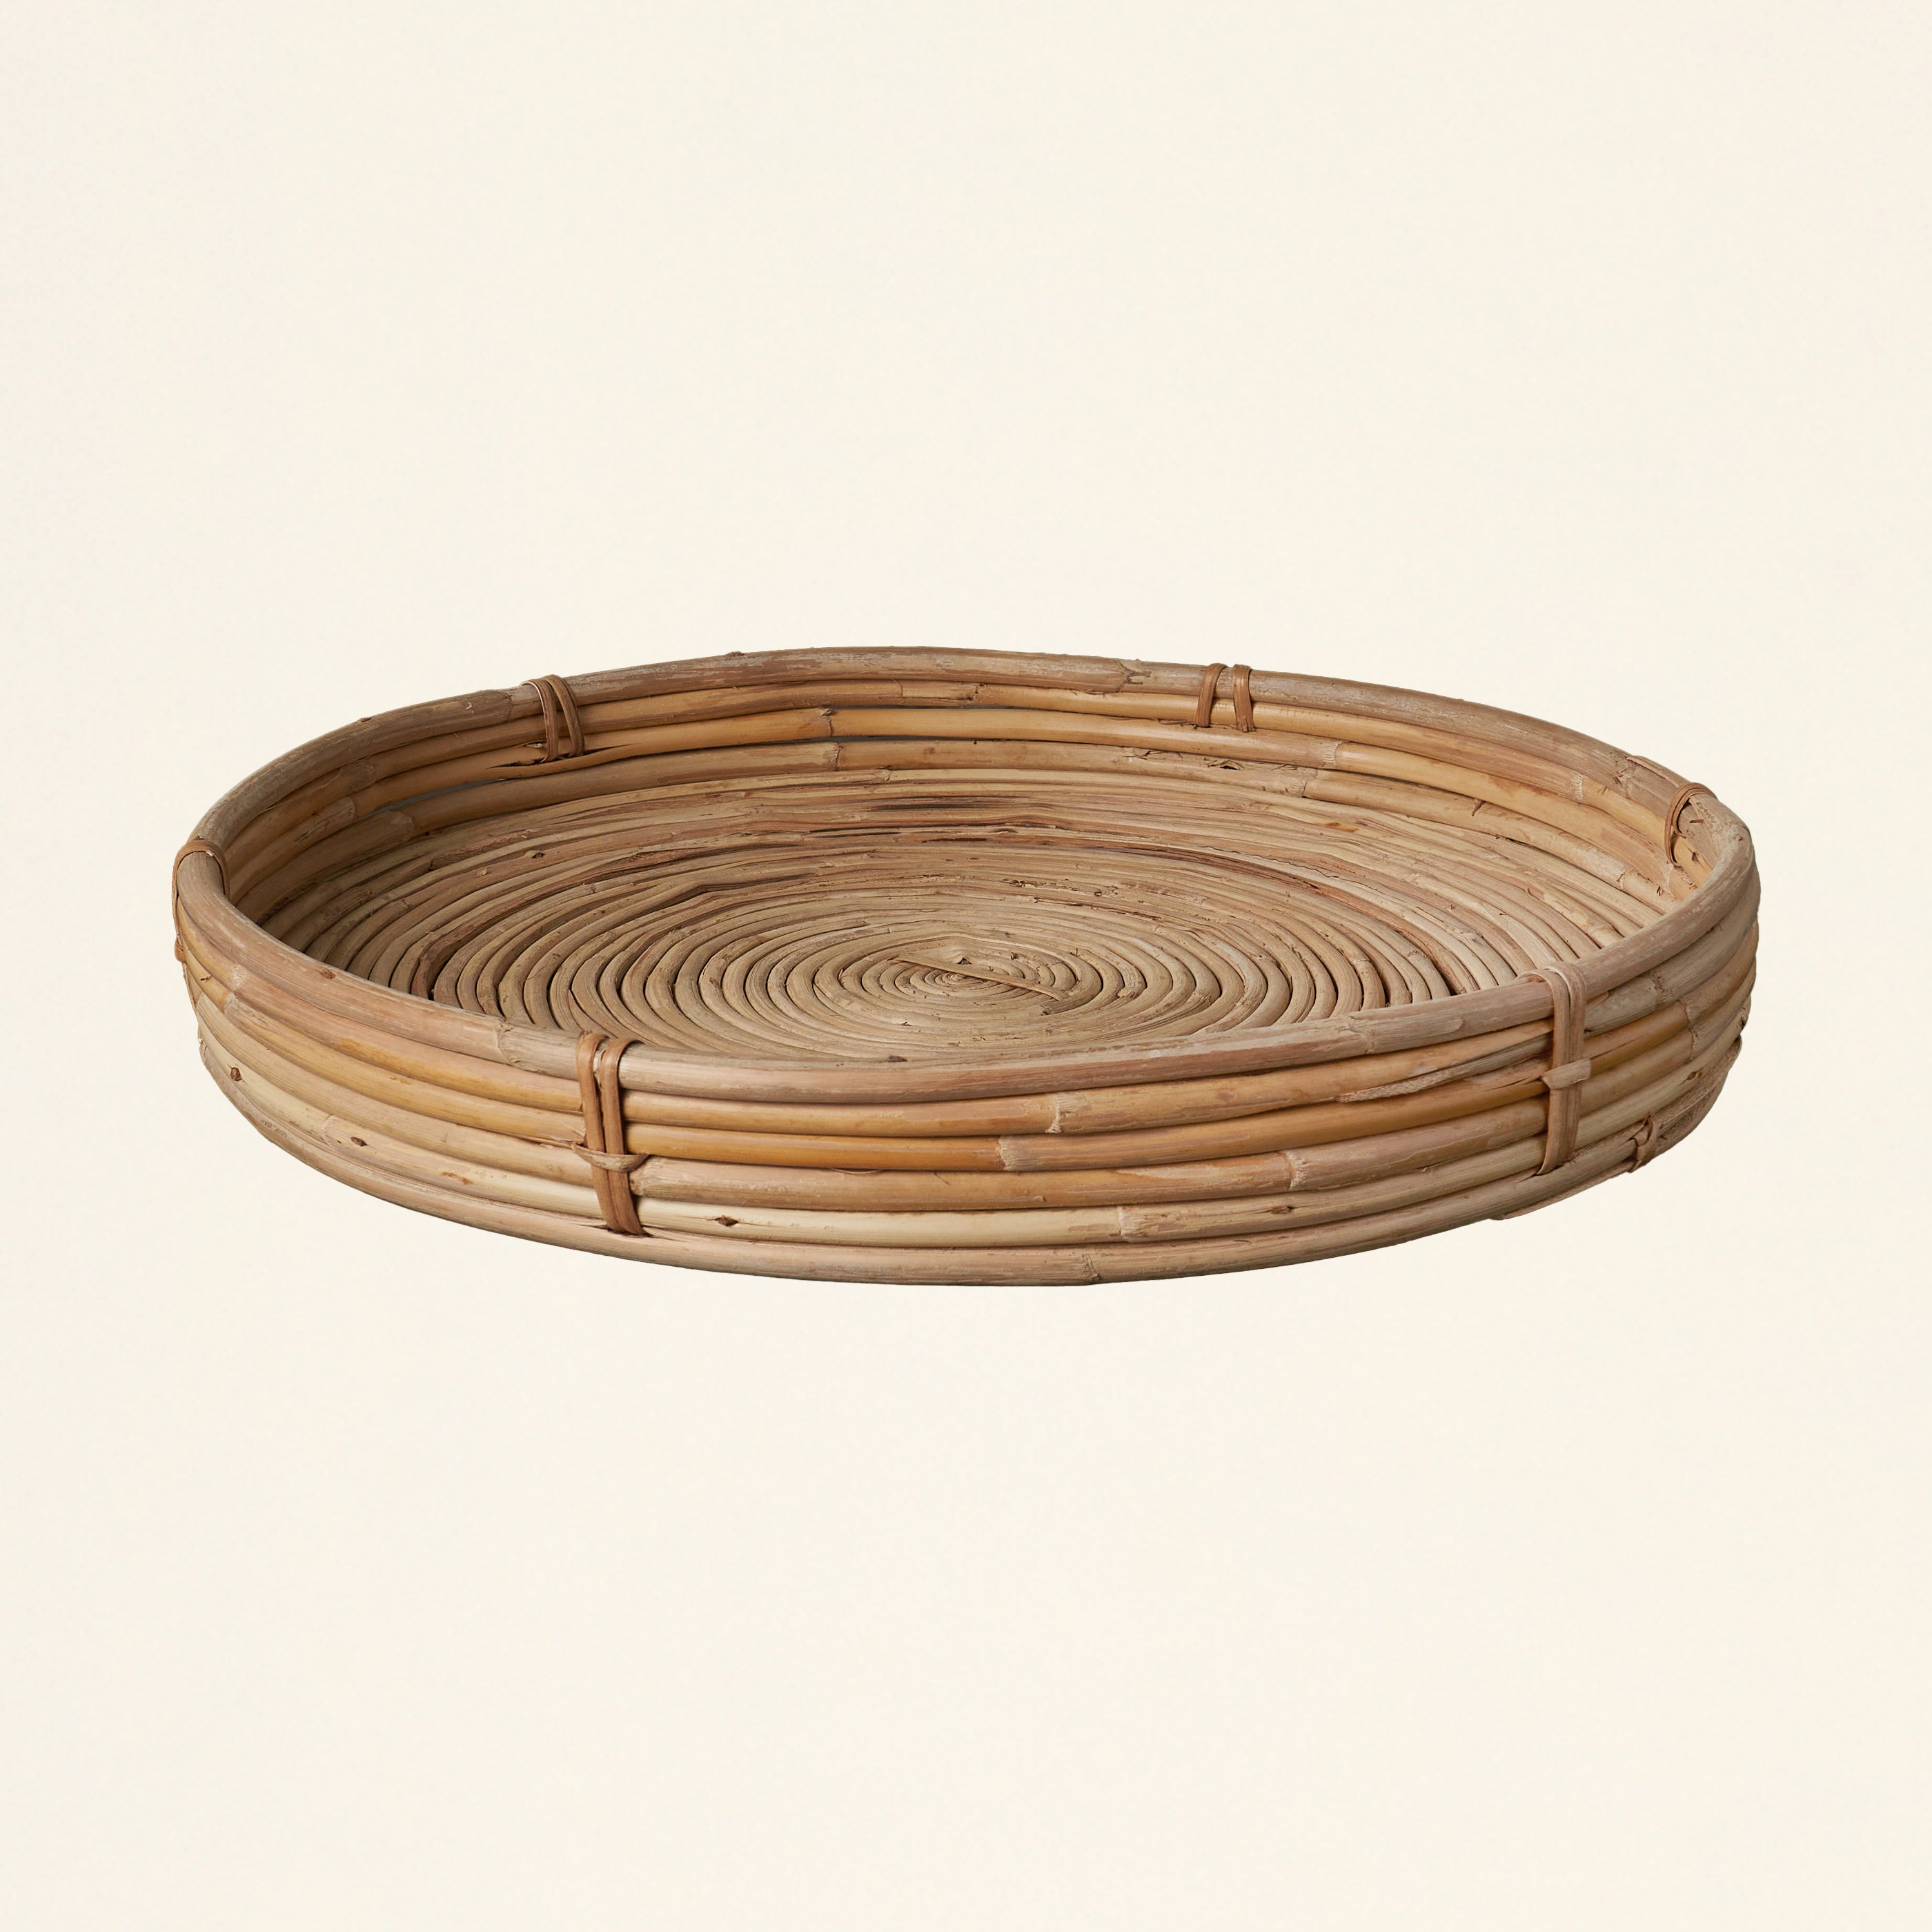 Hand-Woven Cane Tray